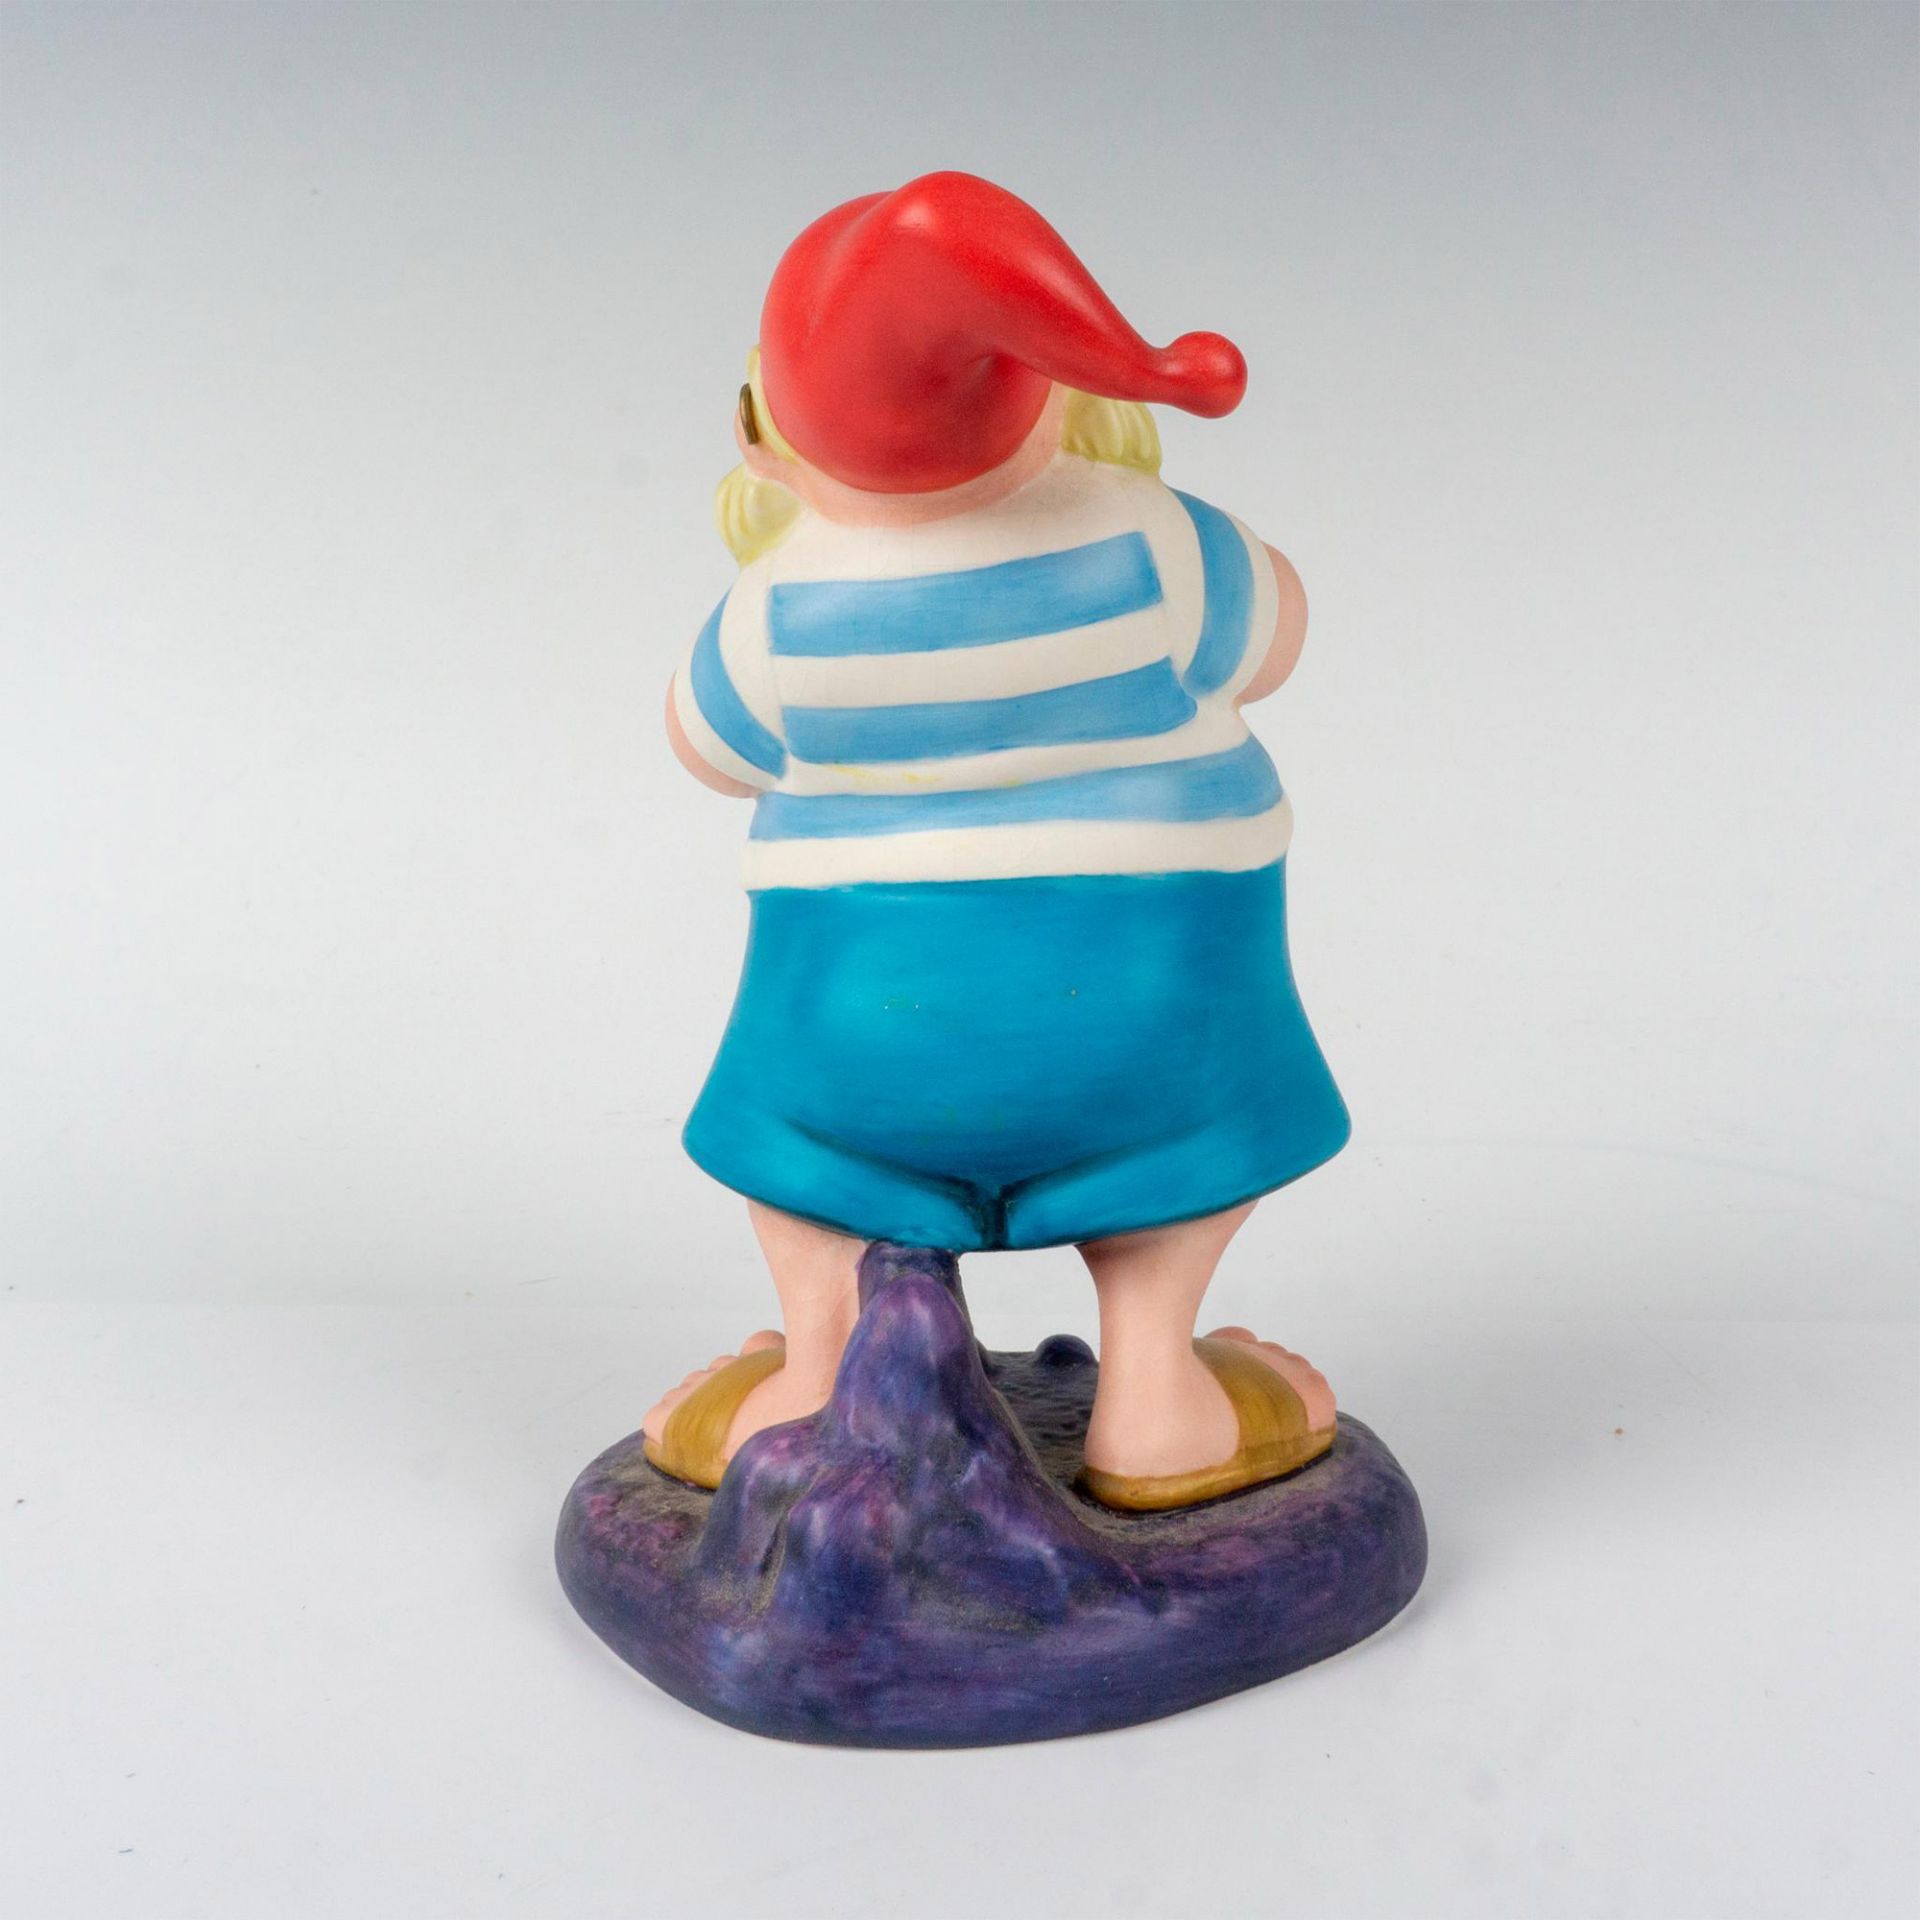 Walt Disney Classics Collection Figurine, Mr. Smee - Image 2 of 4